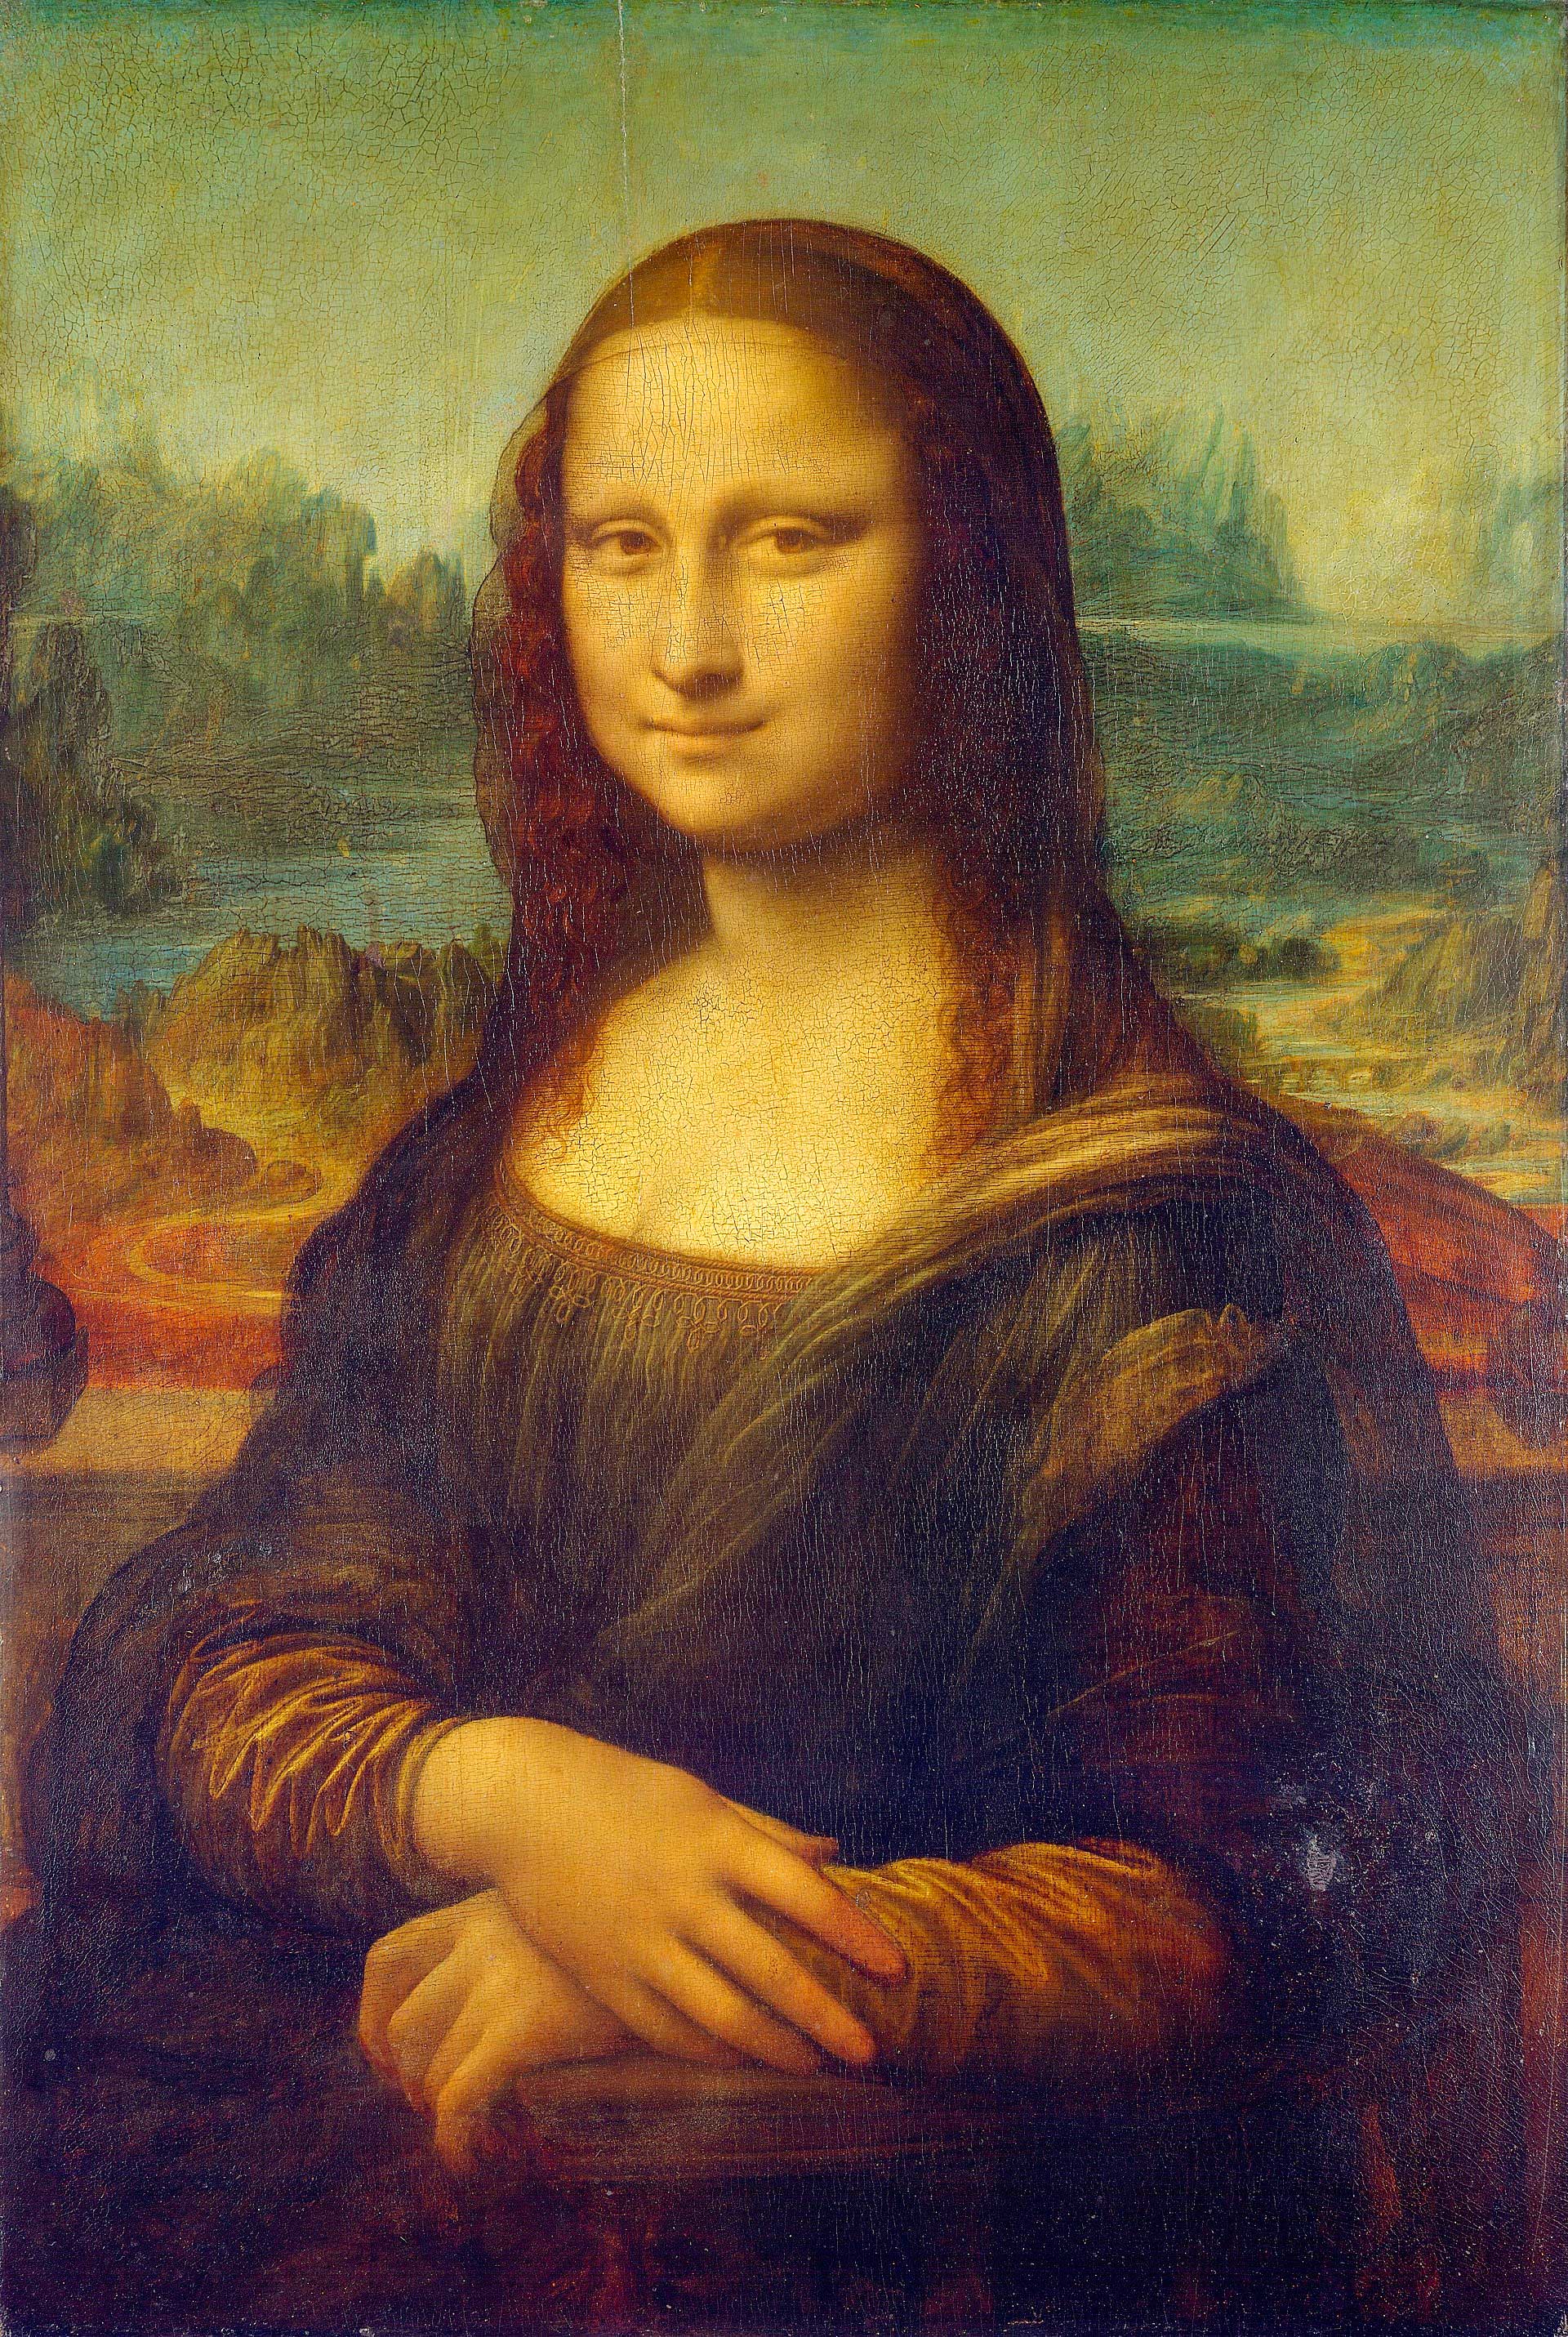 Vinci Leonardo da - Mona Lisa